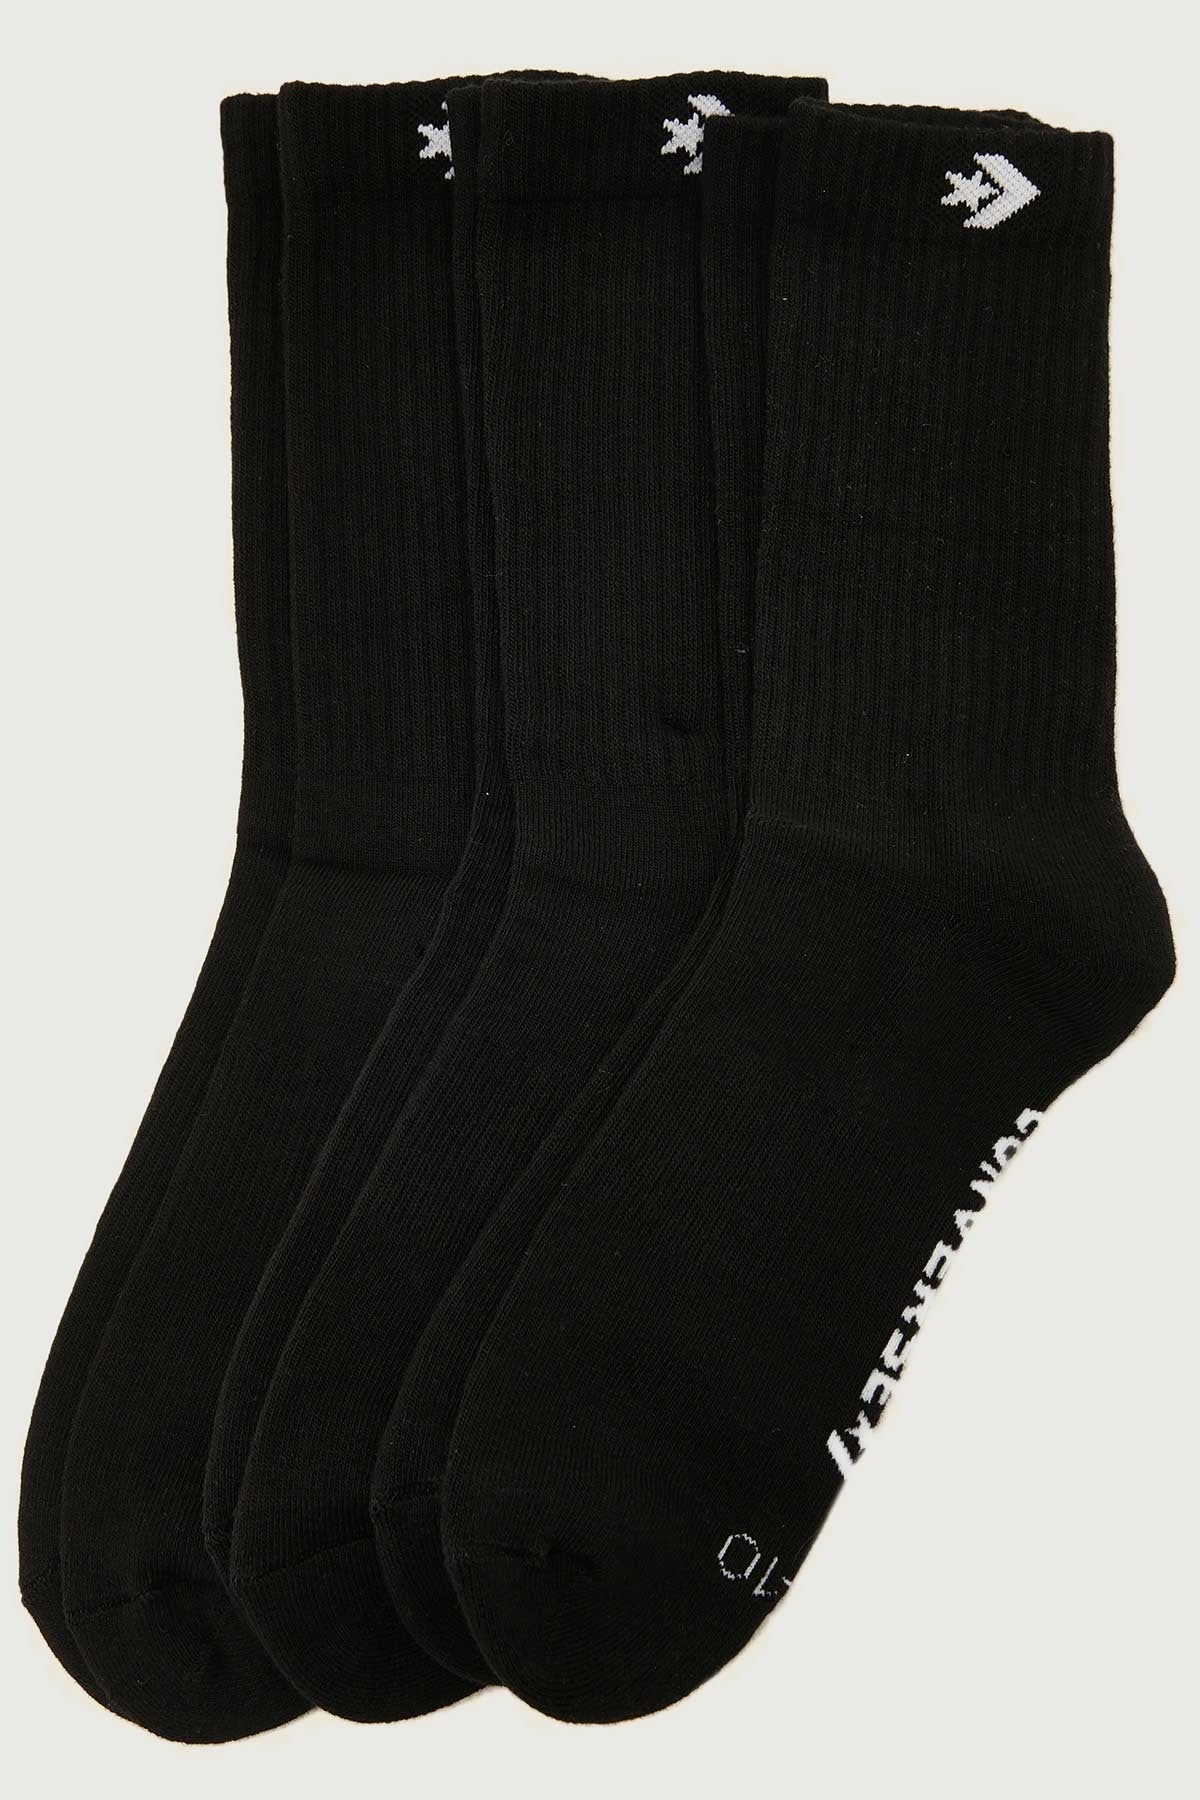 Converse Crew Sock 3 Pack Black